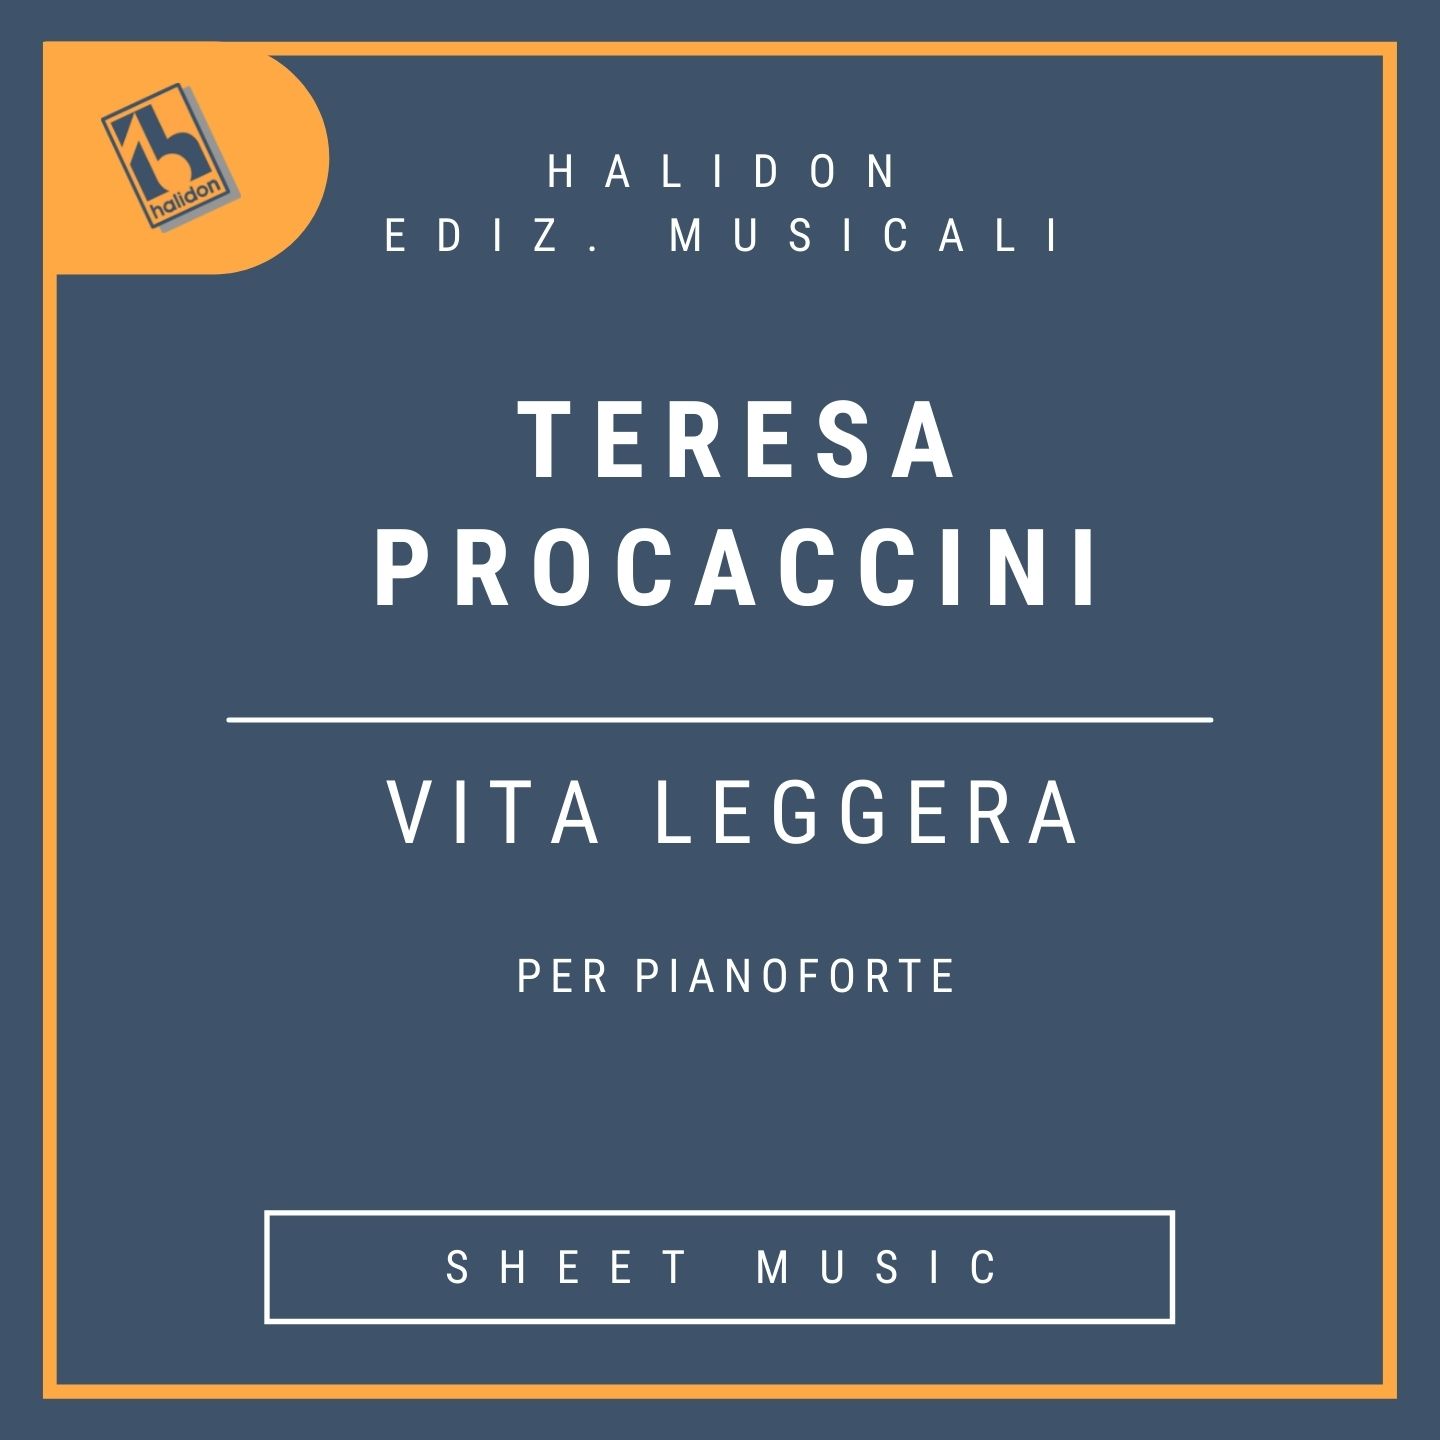 Teresa Procaccini - Vita leggera